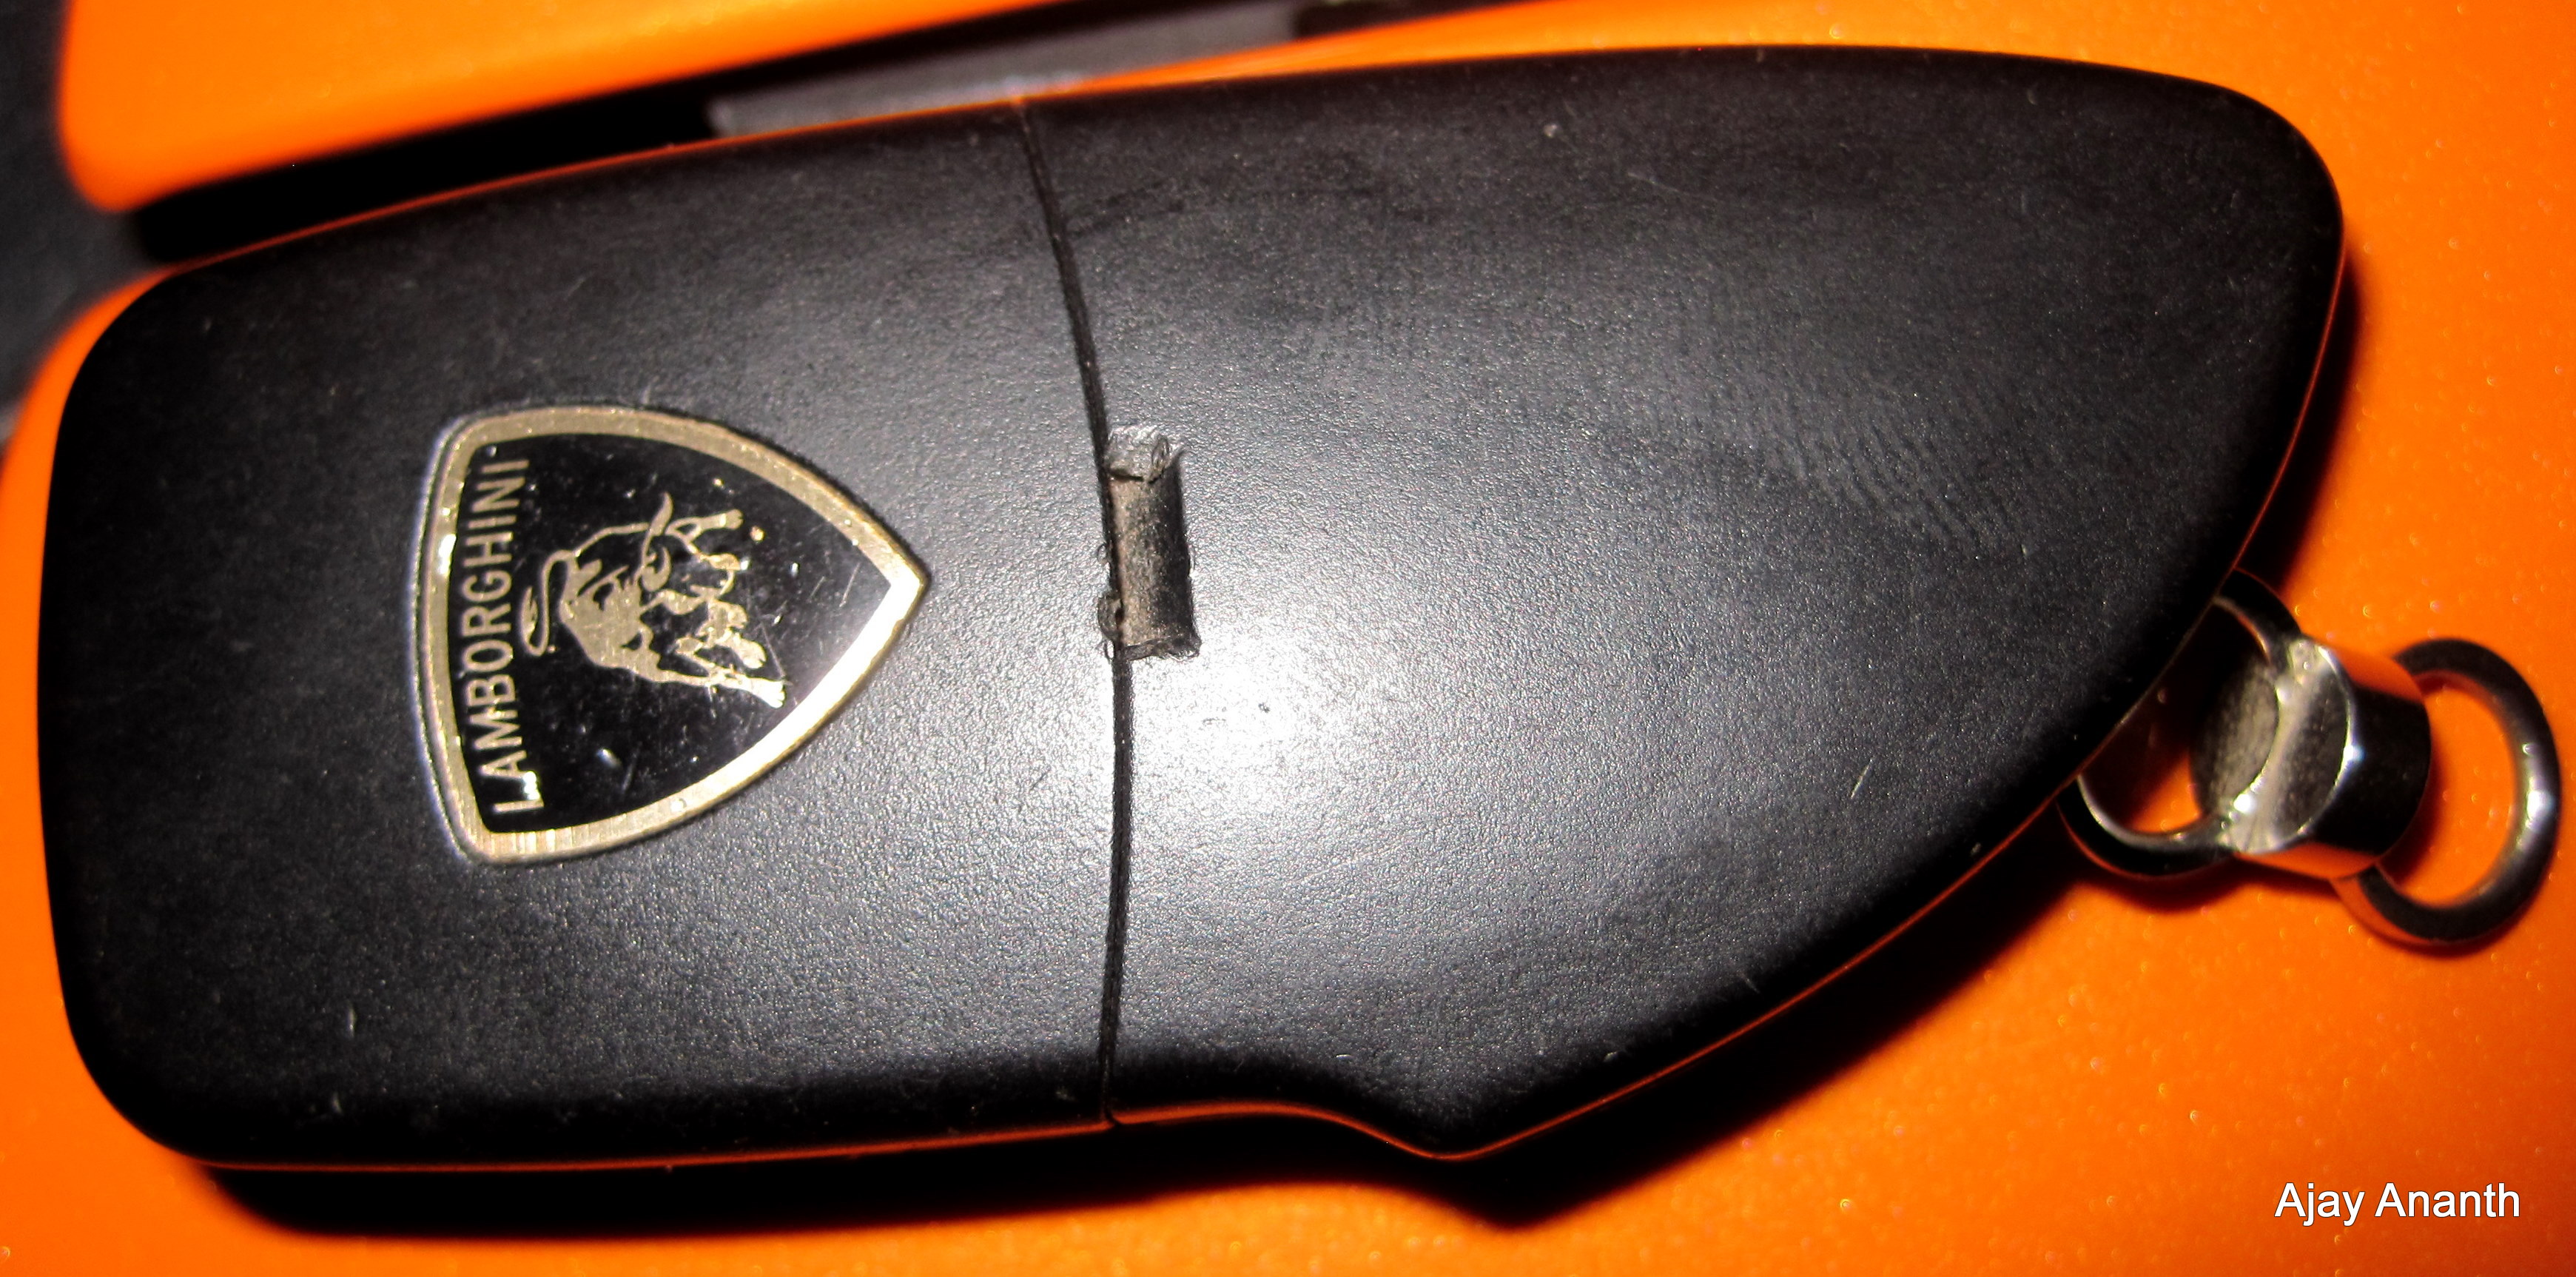 Lamborghini Gallardo Spyder's Key